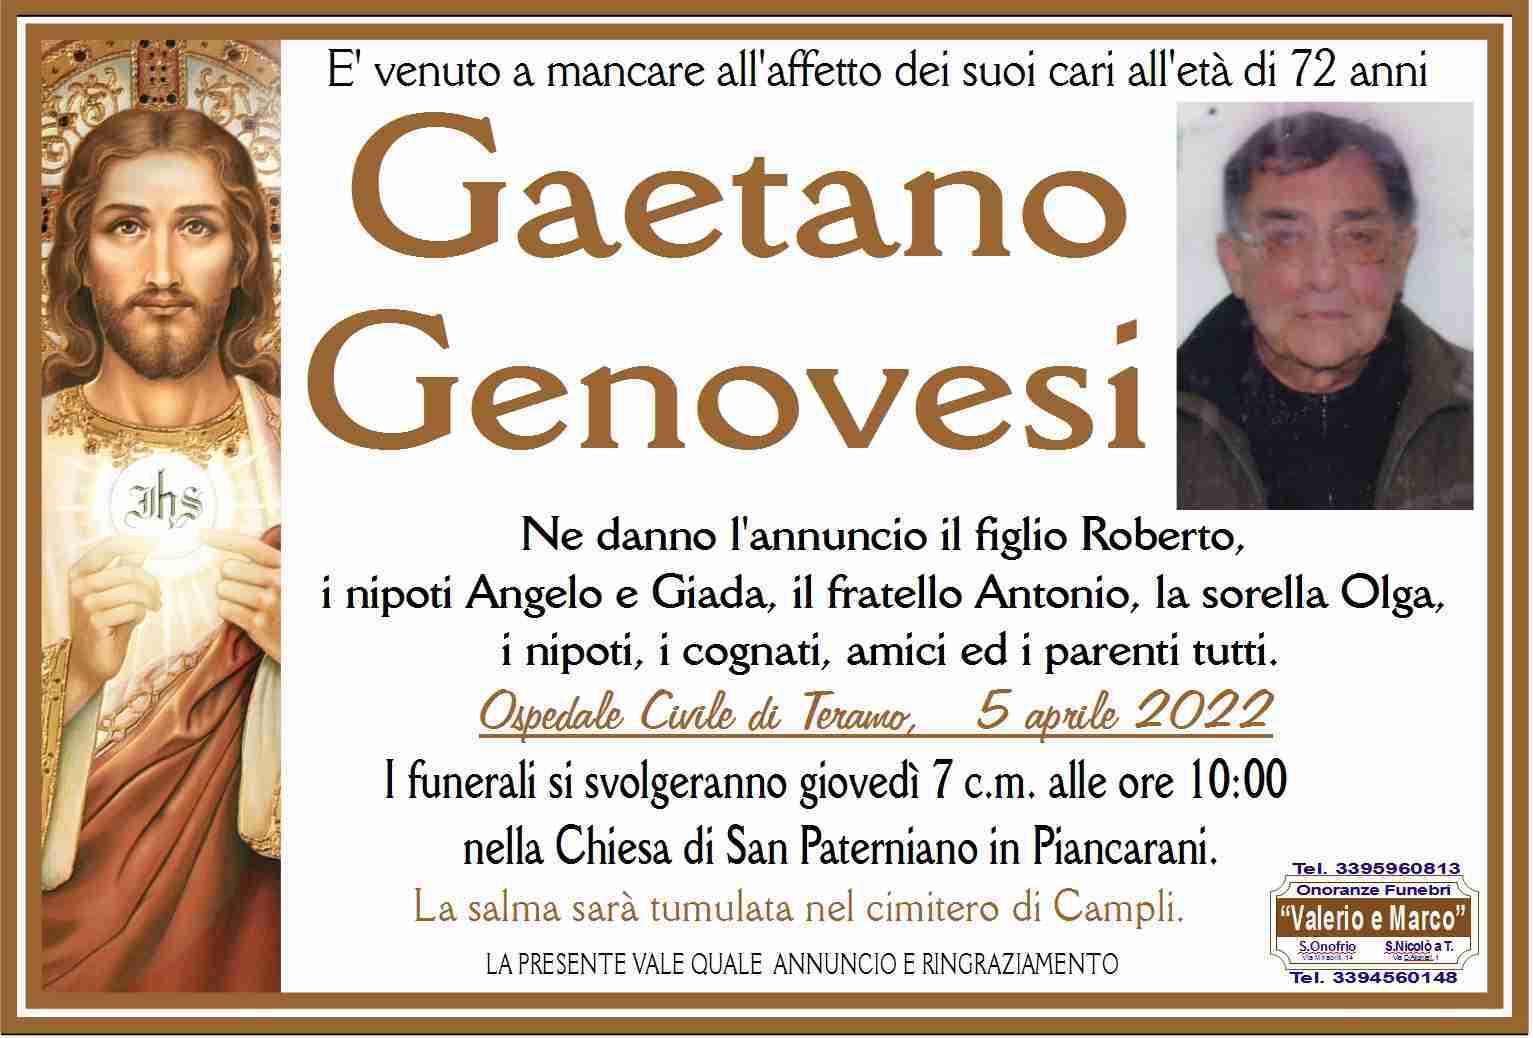 Gaetano Genovesi